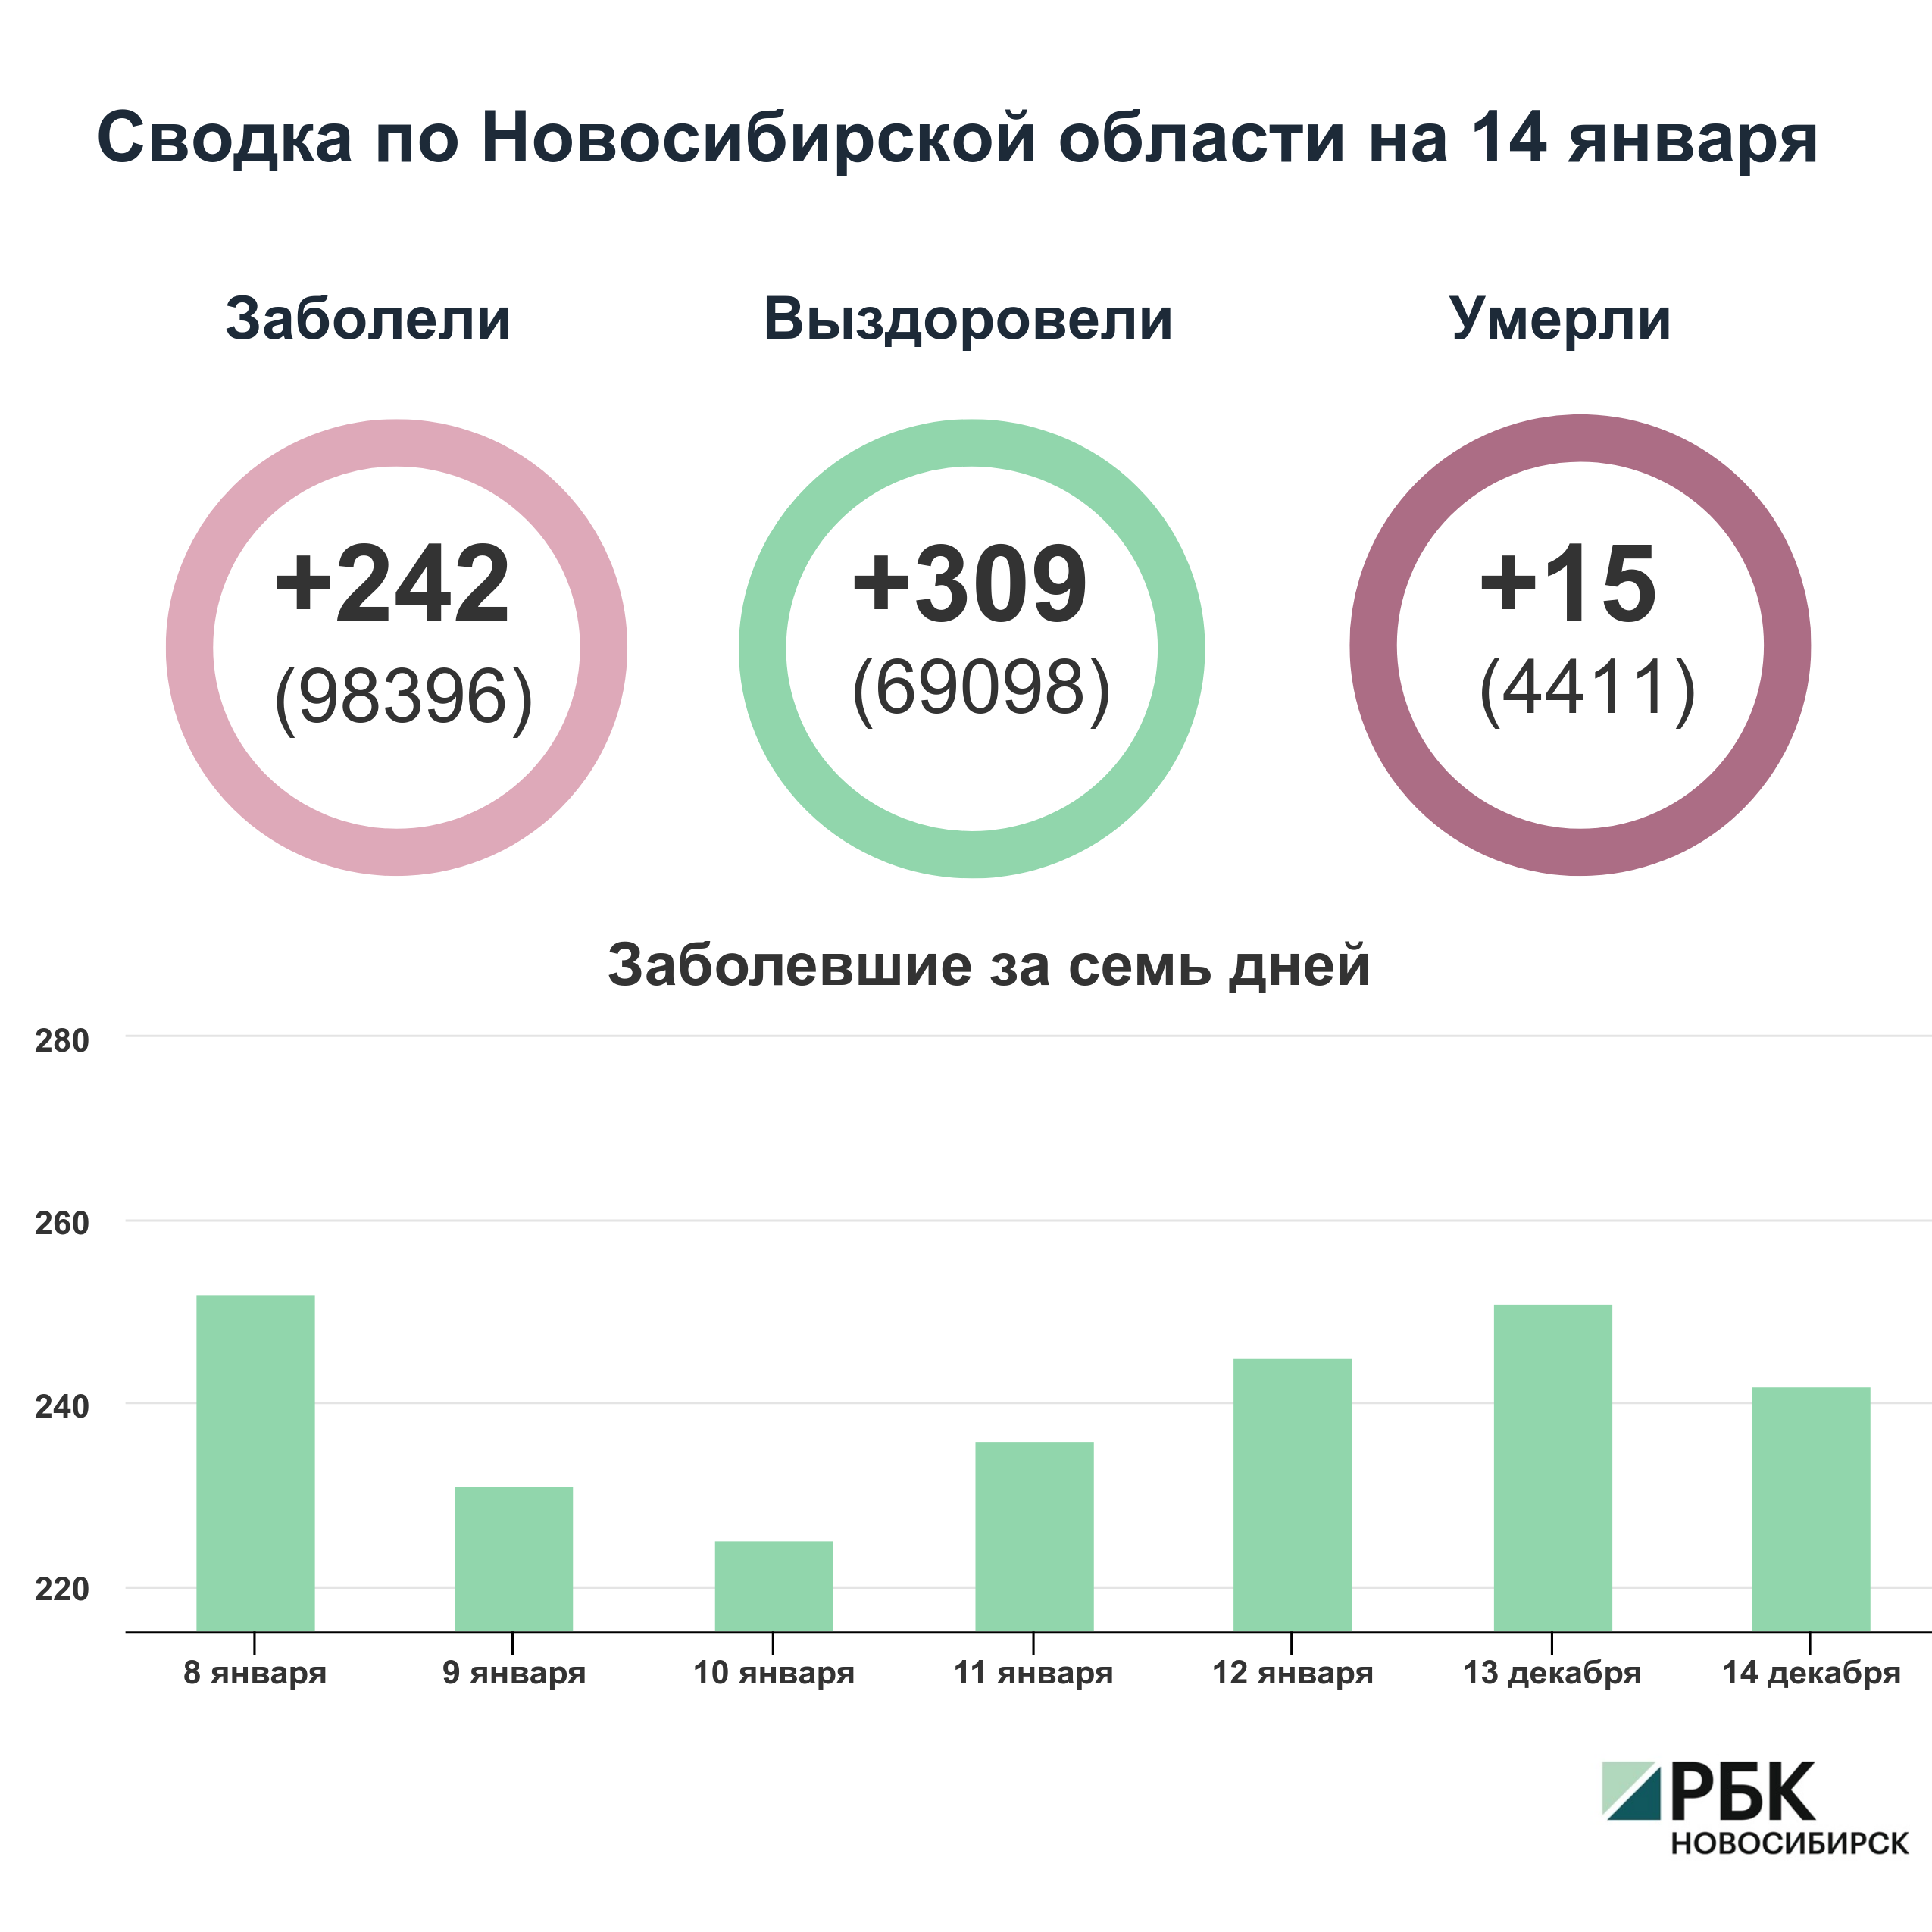 Коронавирус в Новосибирске: сводка на 14 января